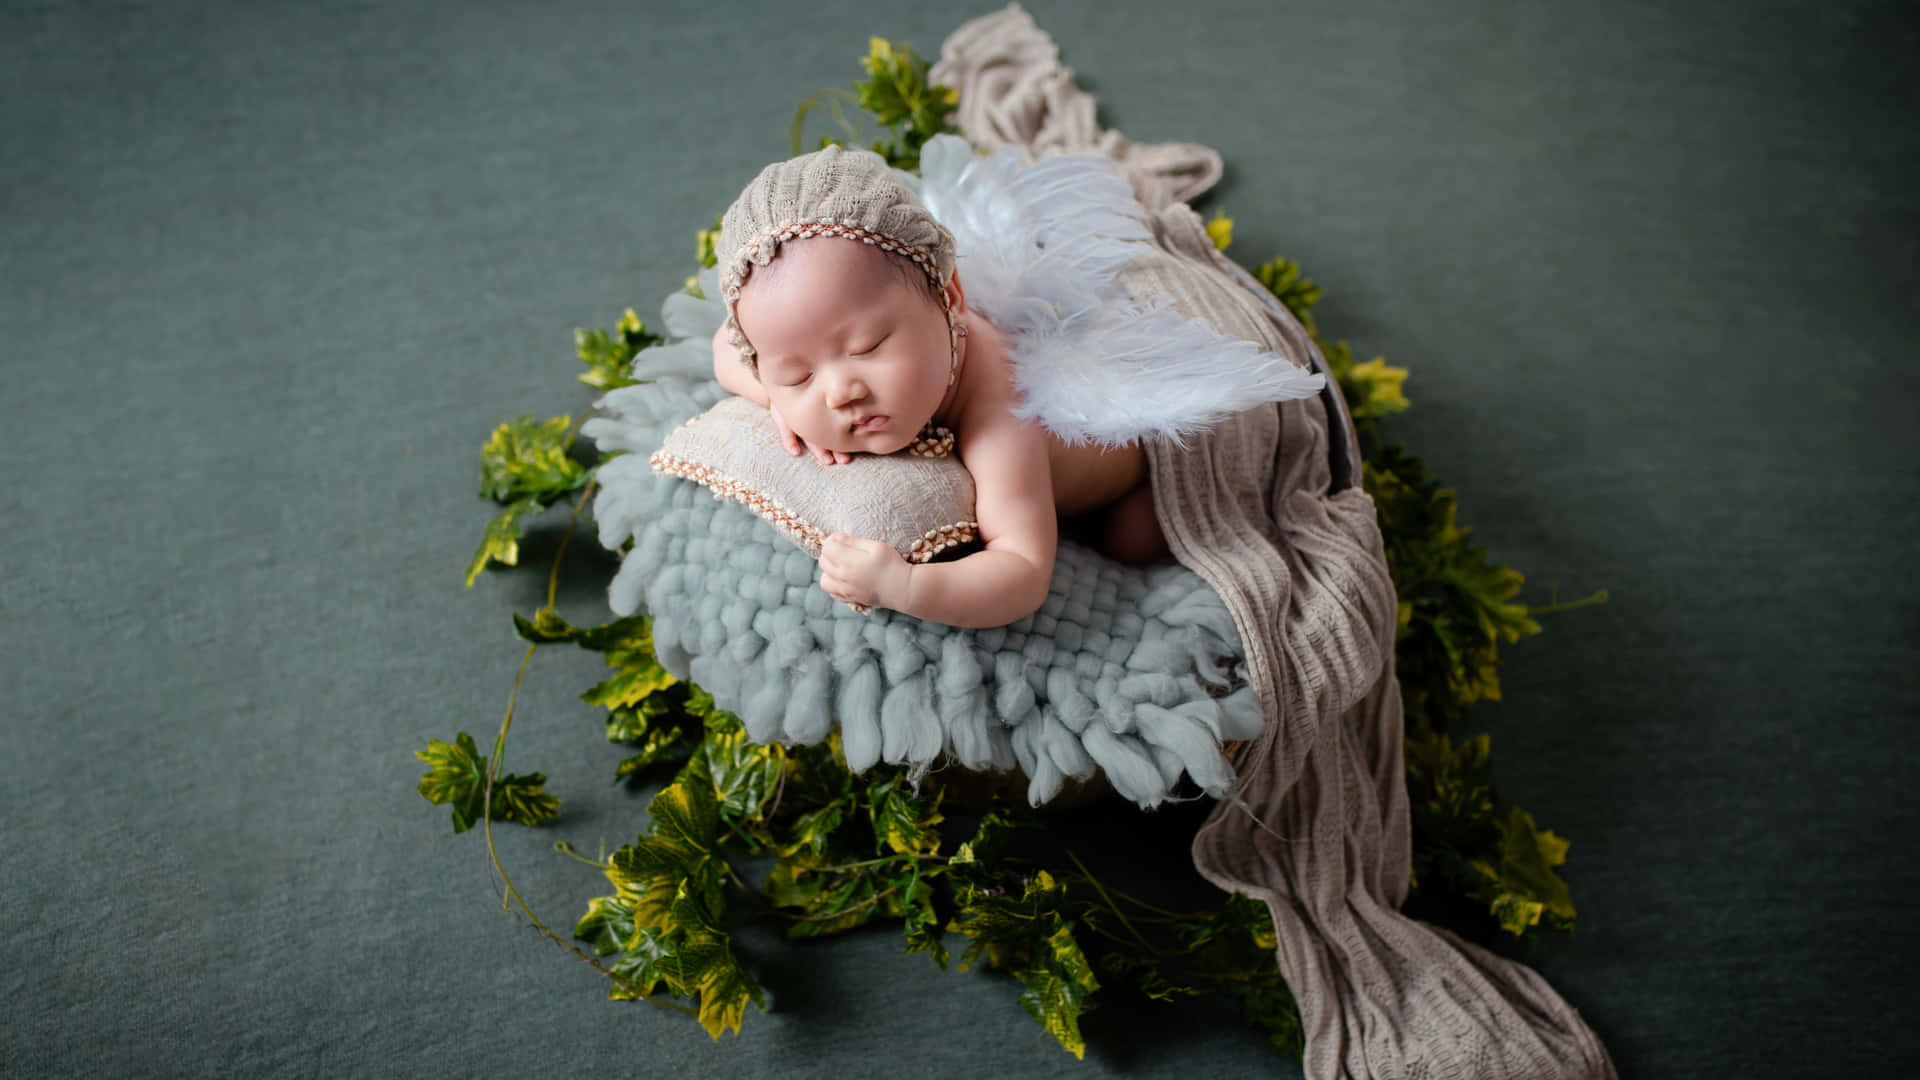 Sleeping Newborn Baby During A Photo Shoot